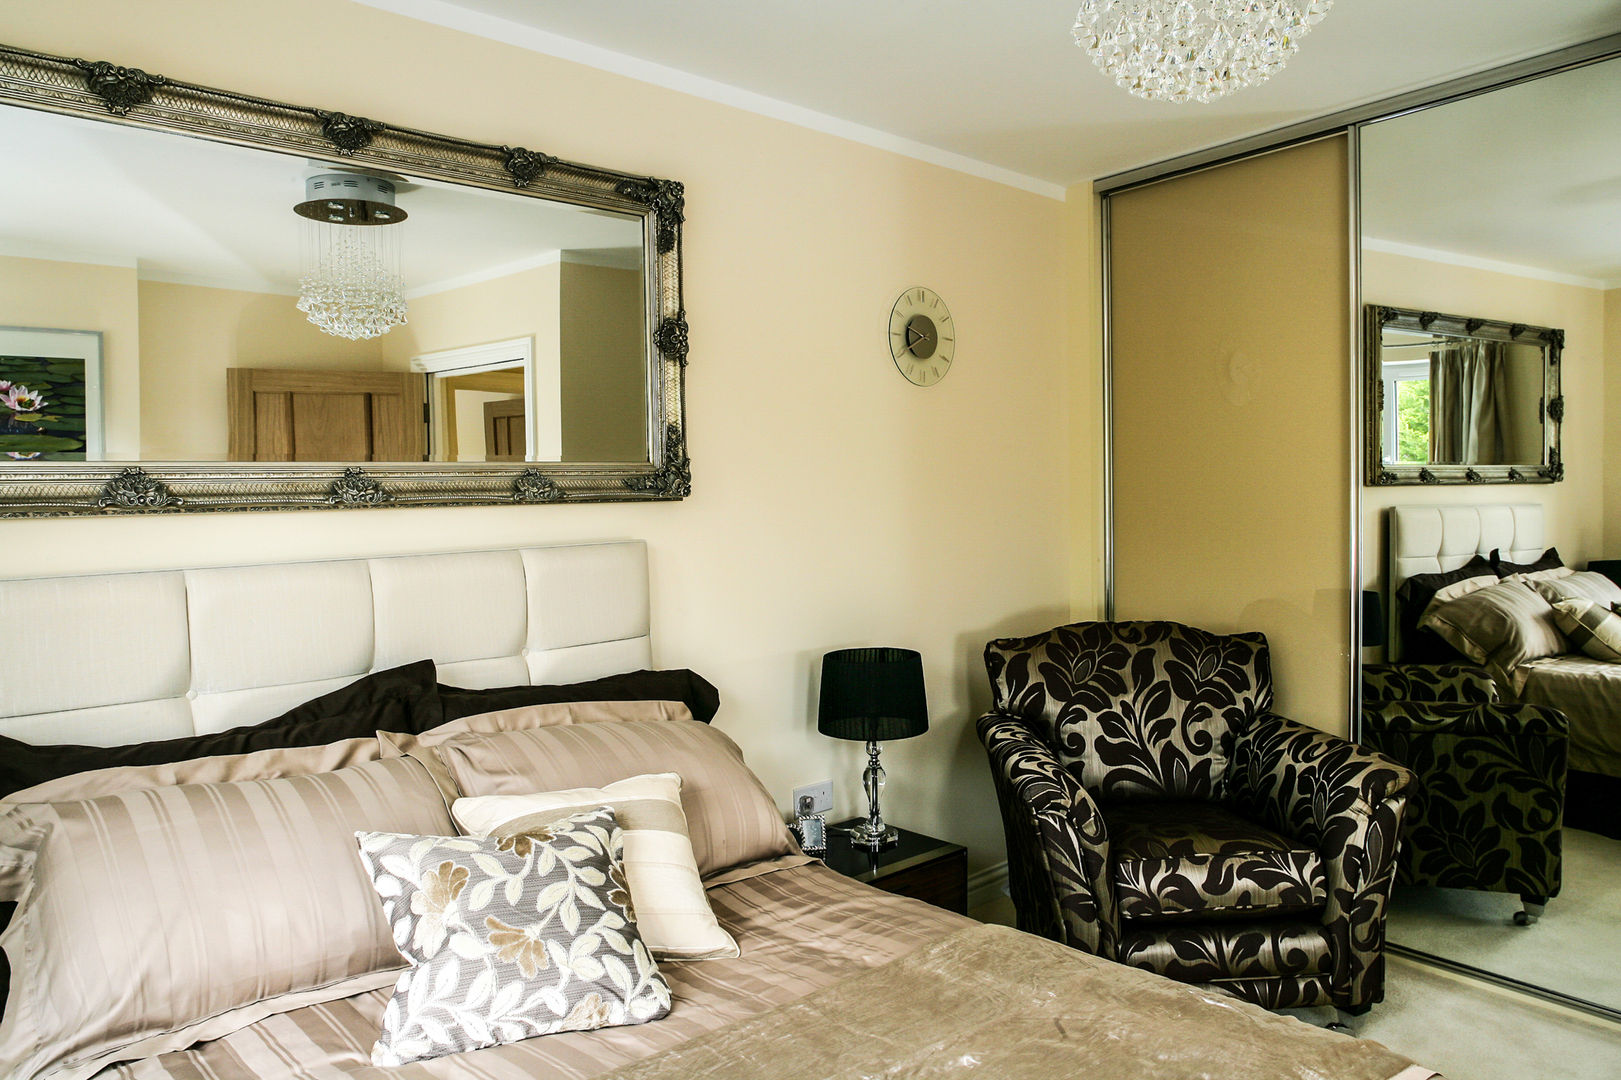 Bedroom Lujansphotography Dormitorios modernos